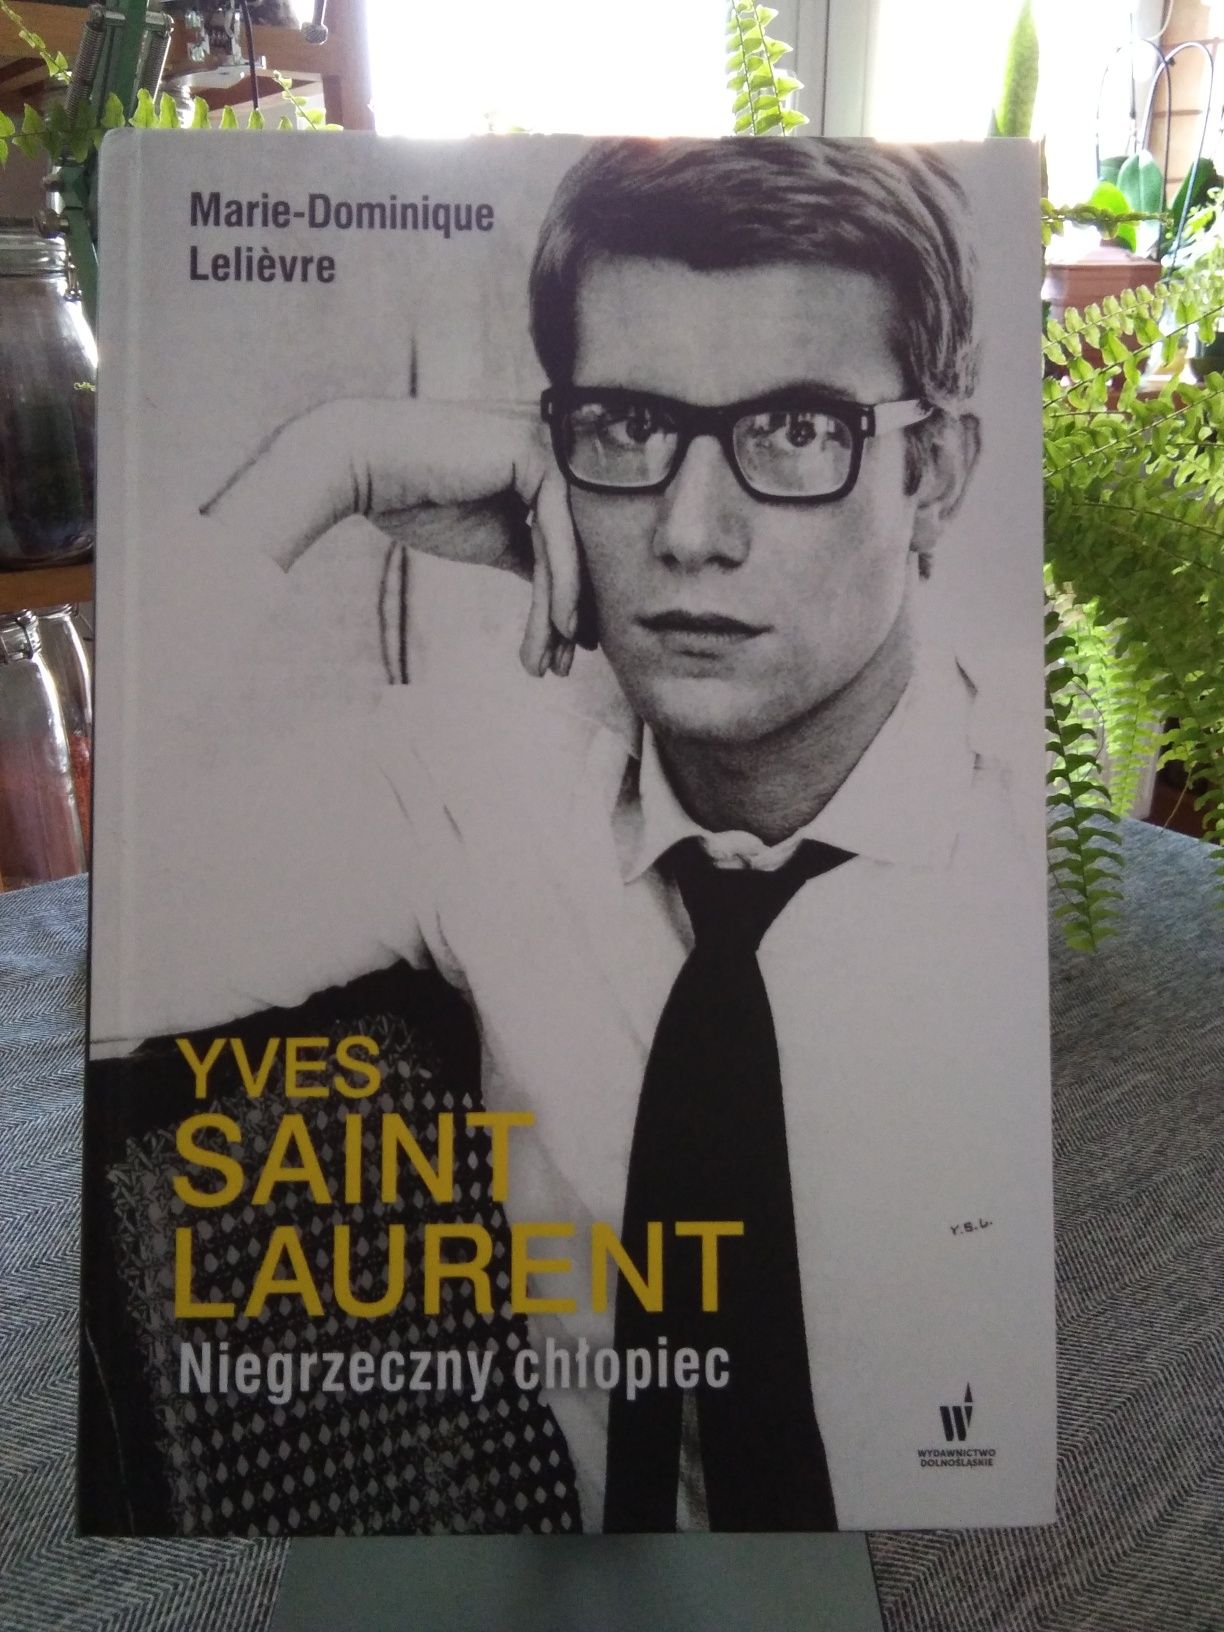 "Yves Saint Laurent-niegrzeczny chłopiec", Marie-Dominique Lelievre